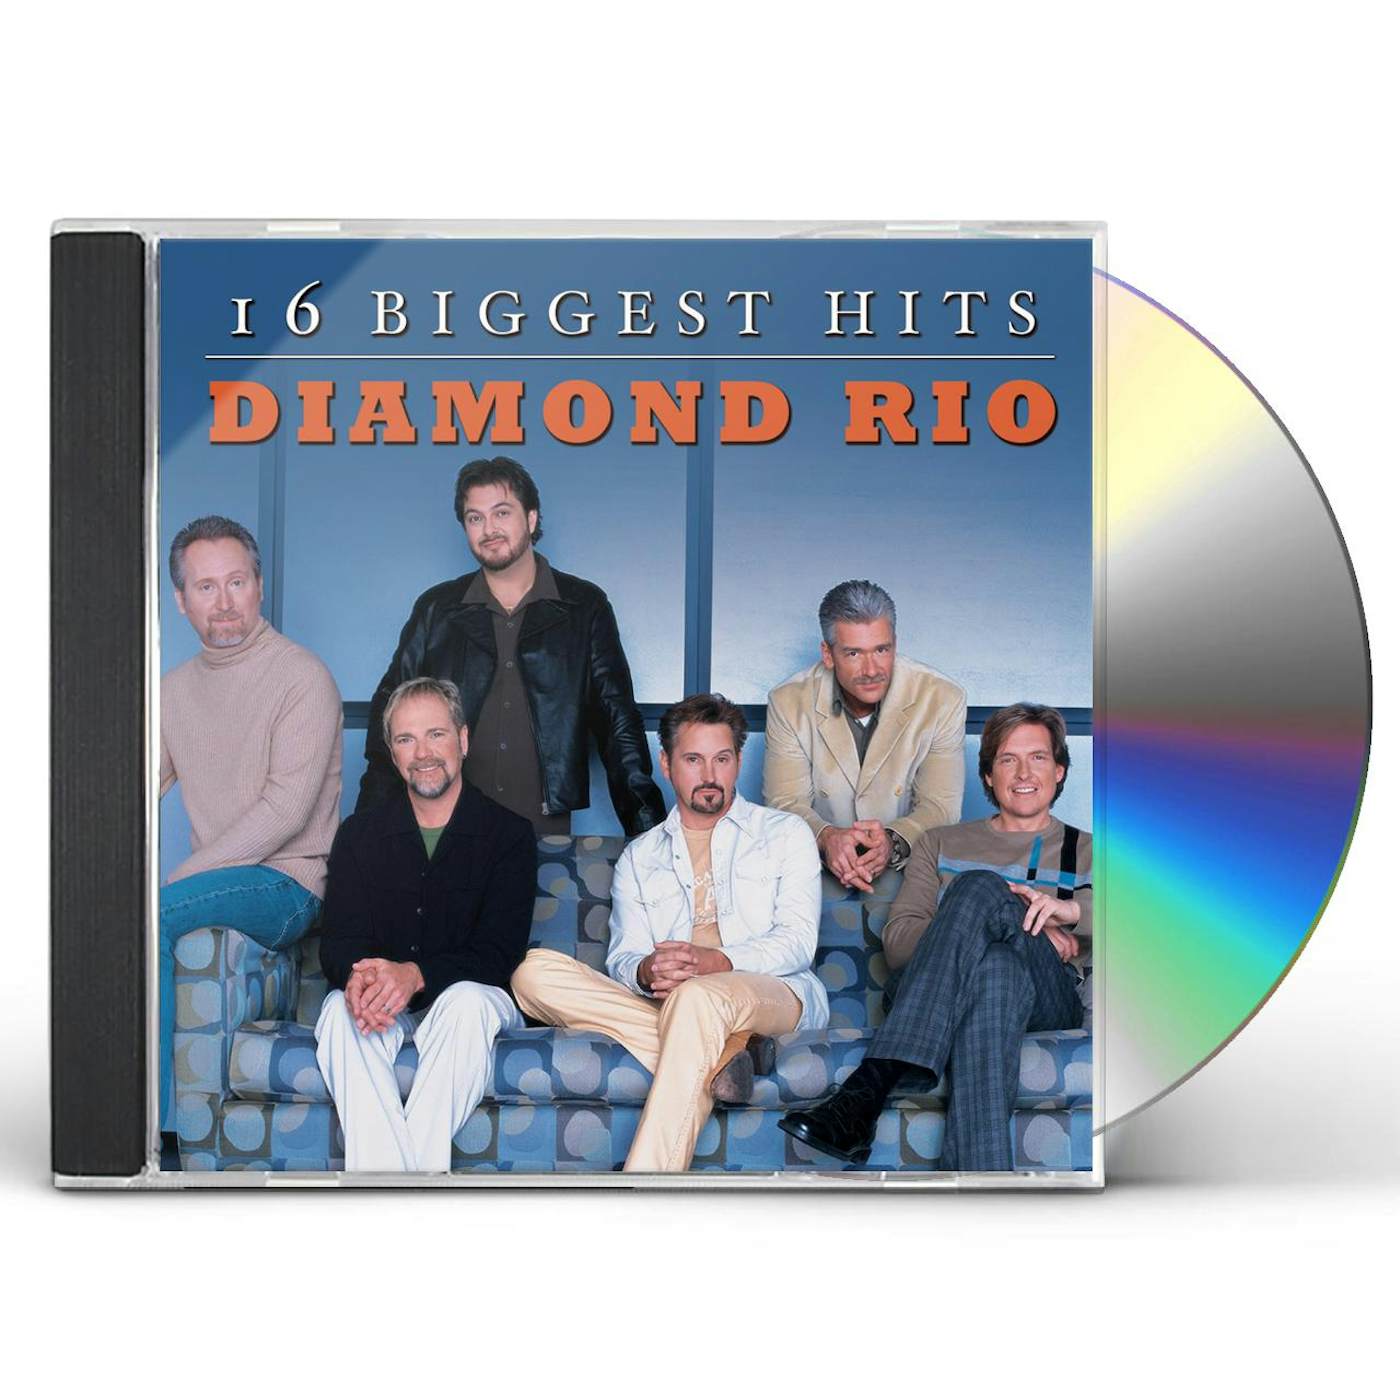 Diamond Rio 16 BIGGEST HITS CD